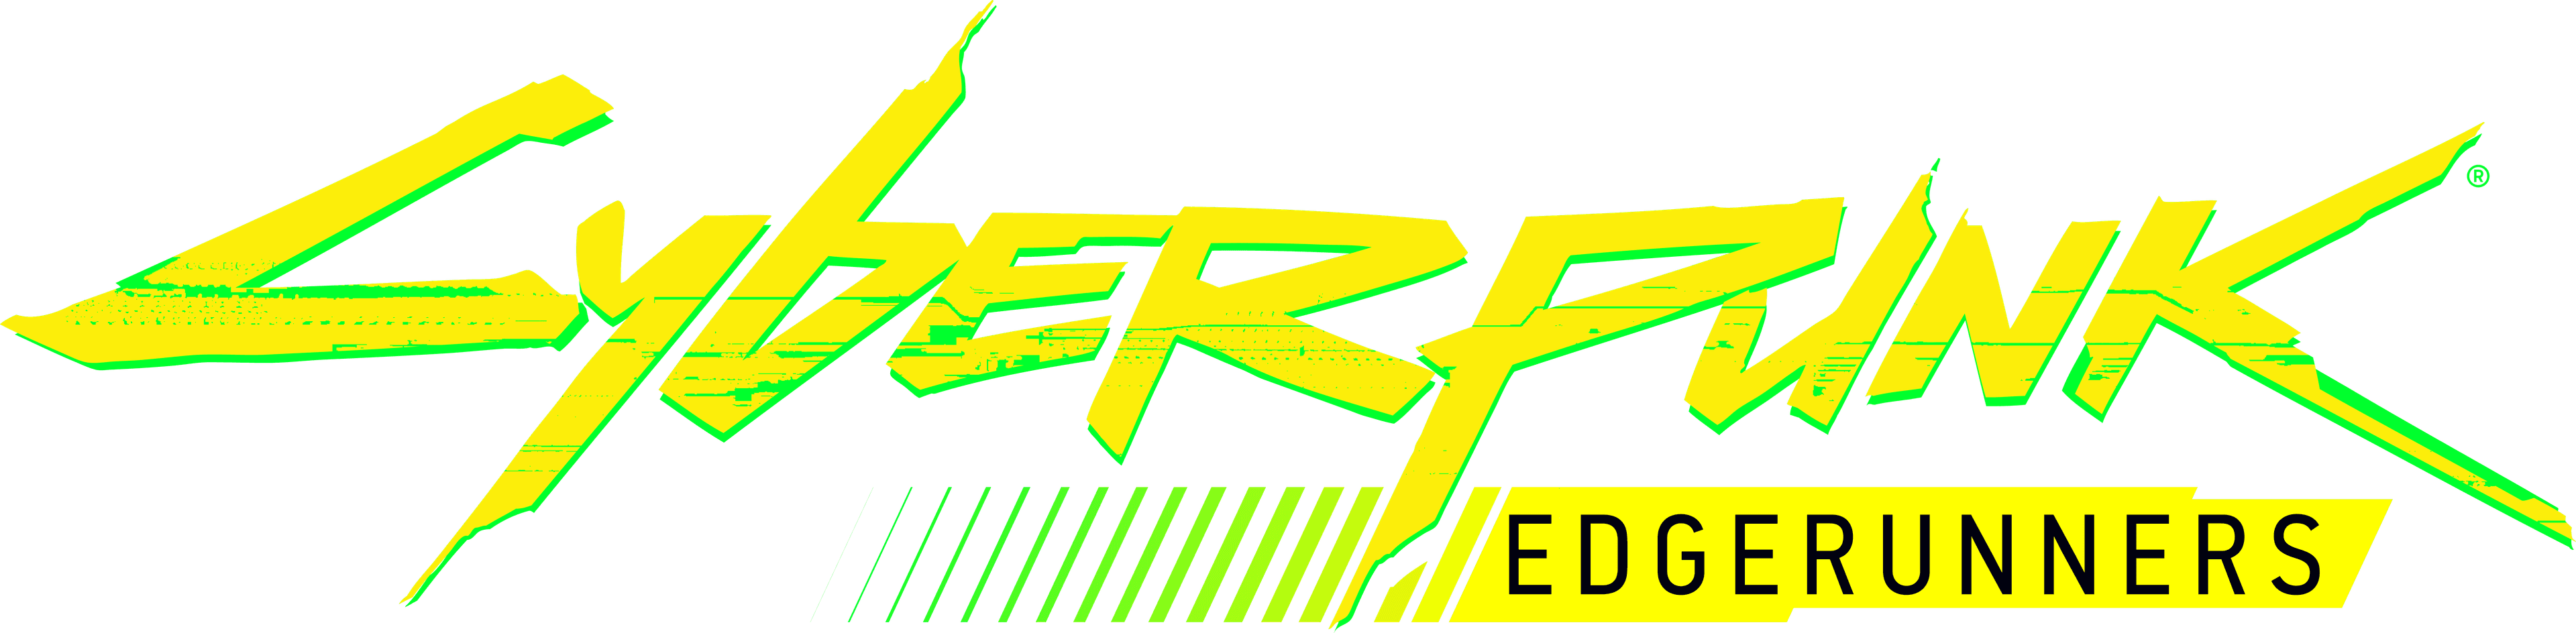 Cyberpunk: Edgerunners logo